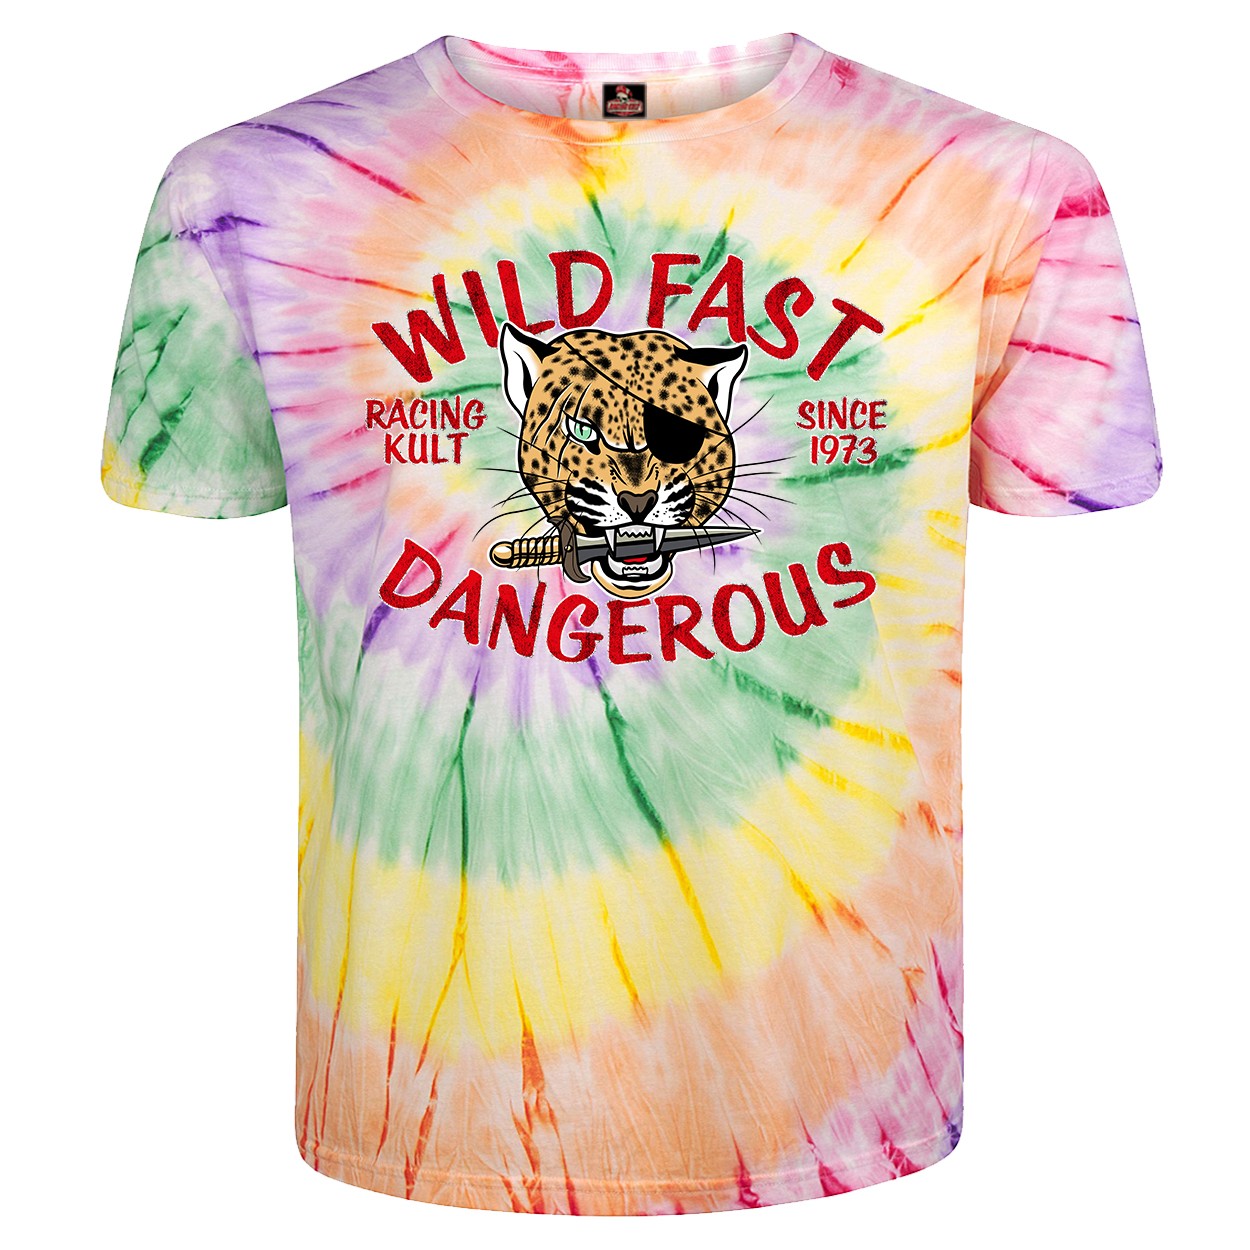 Racing Kult Unisex Kinder T-Shirt Wild Fast Dangerous Tie Dye